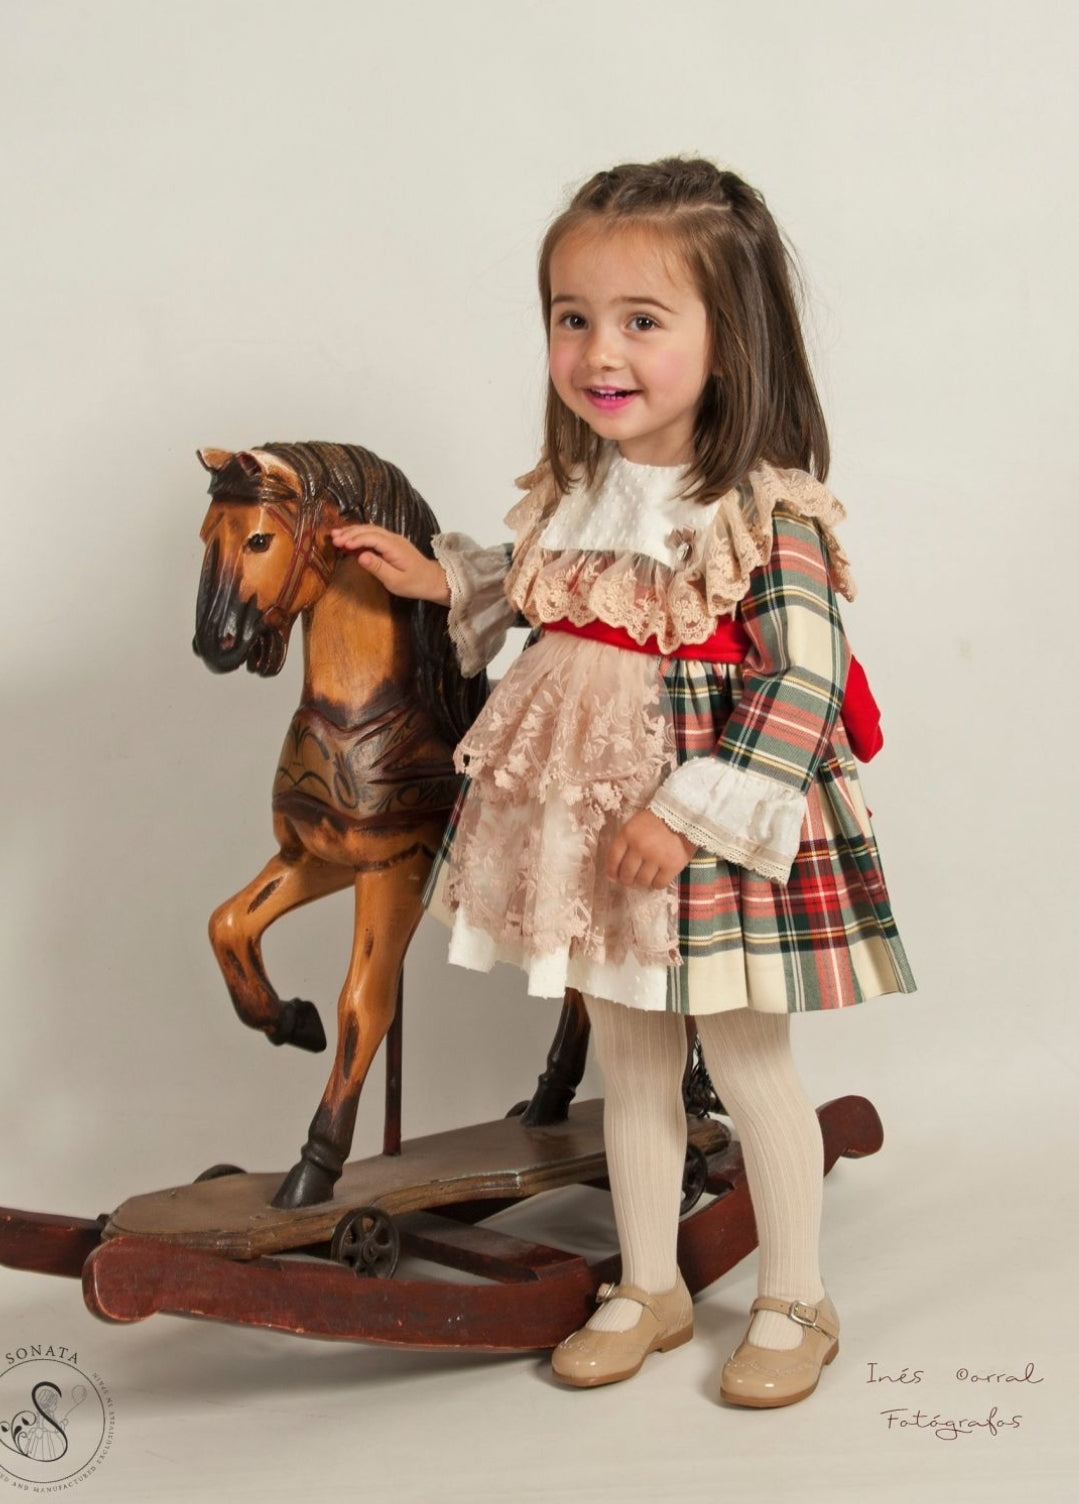 Sonata Infantil Spanish Girls Tartan Lace Puffball Dress MD104 - MADE TO ORDER